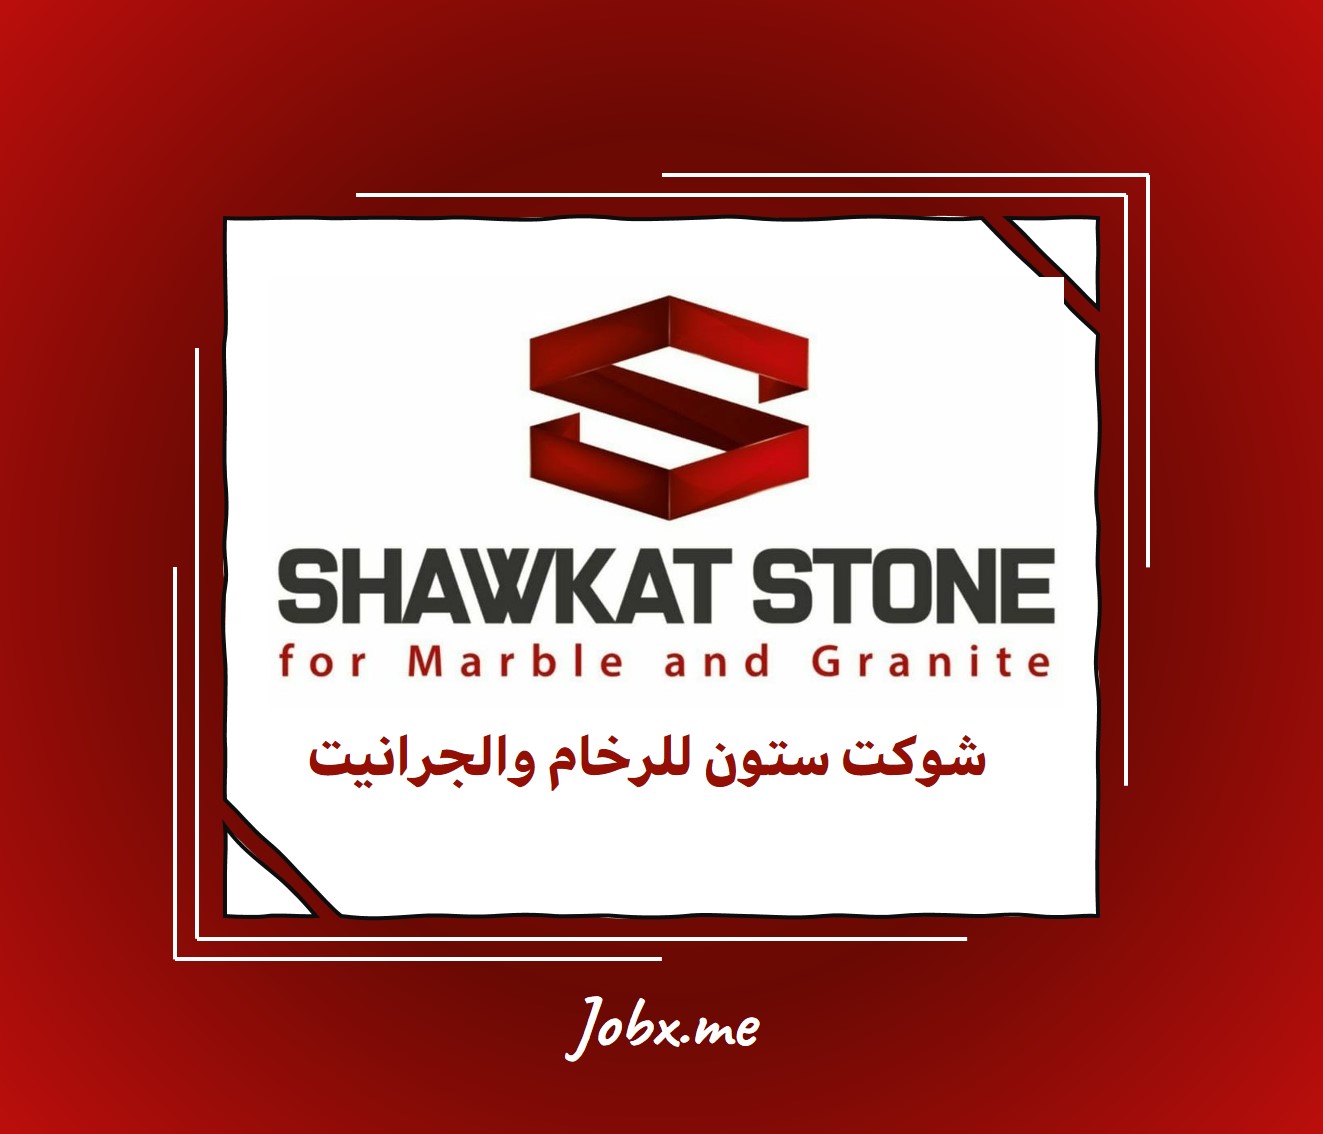 shawkat stone Careers